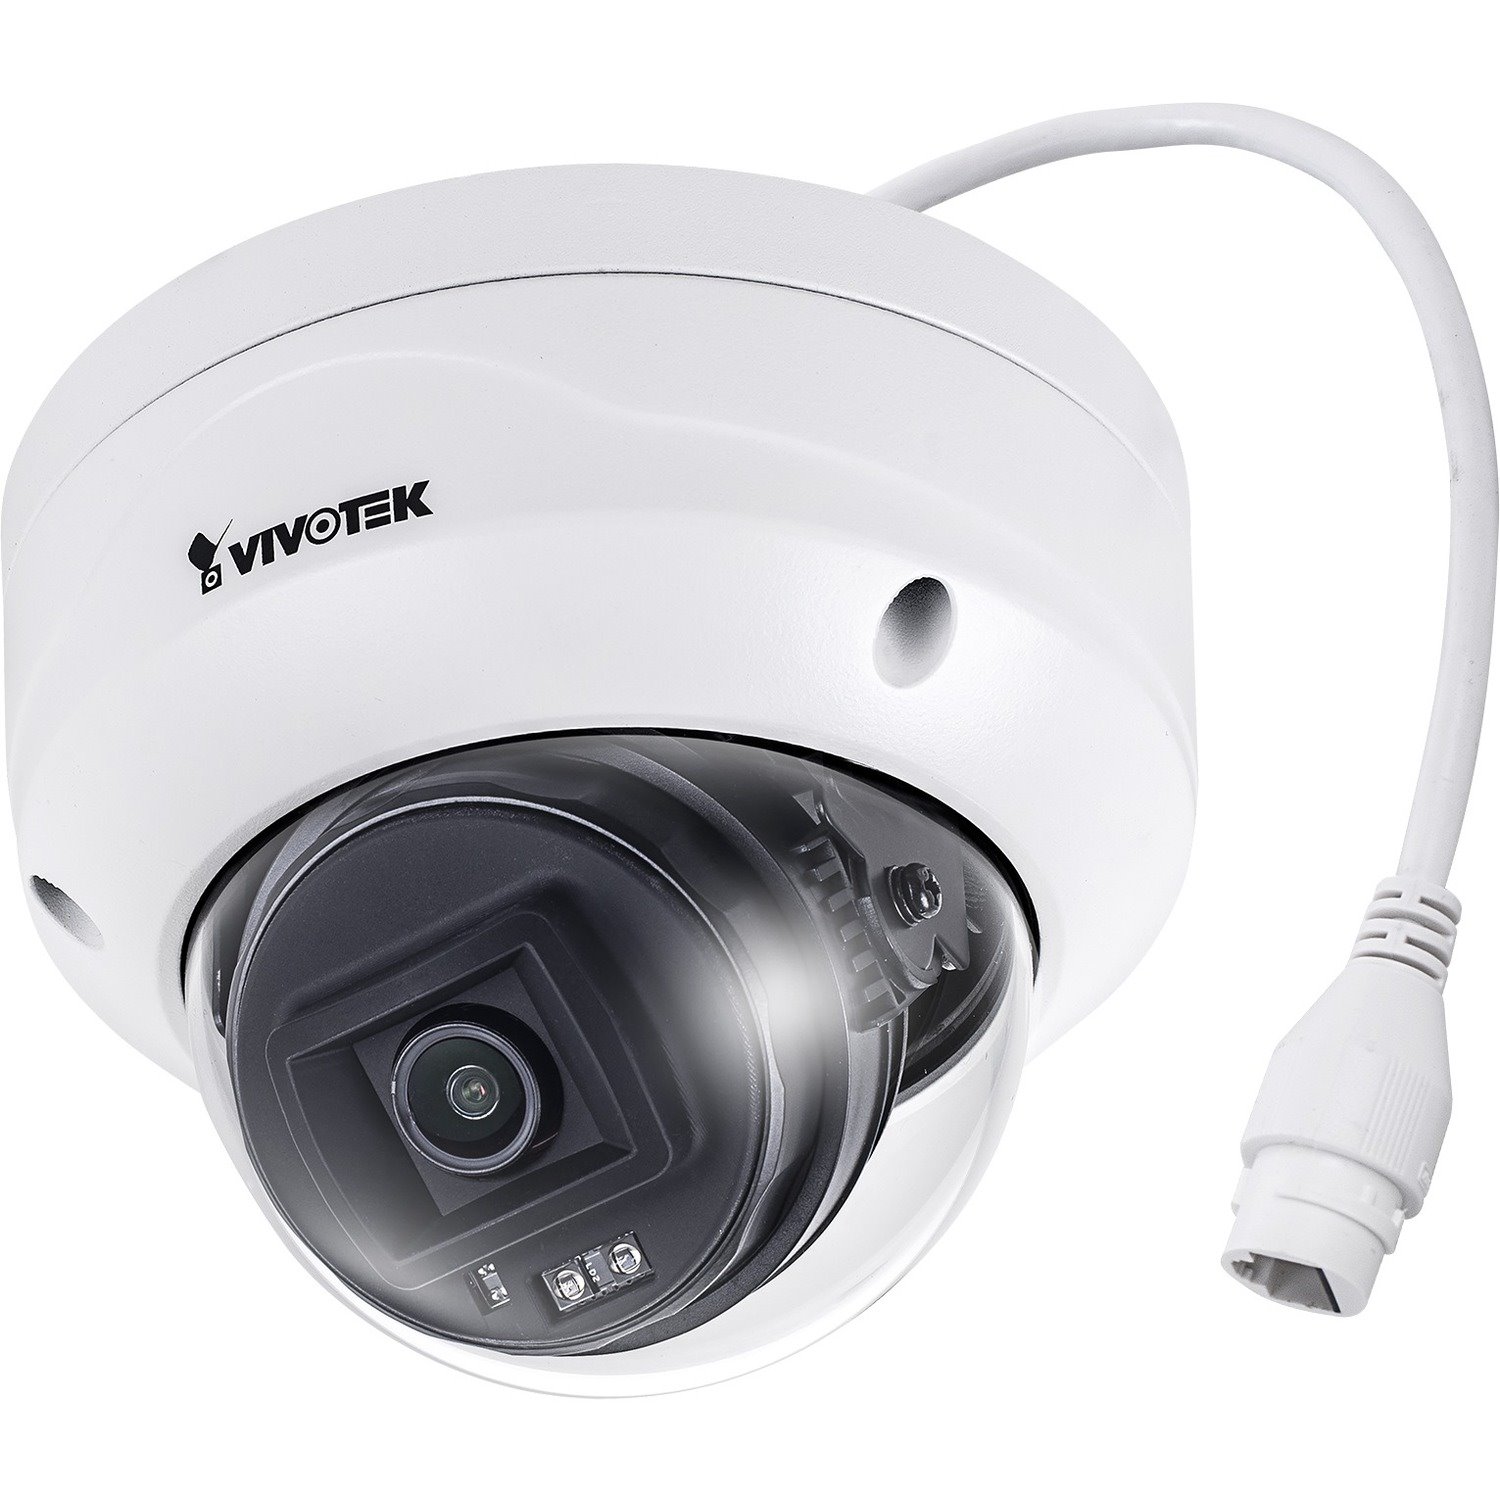 Vivotek FD9360-HF2 2 Megapixel HD Network Camera - Dome